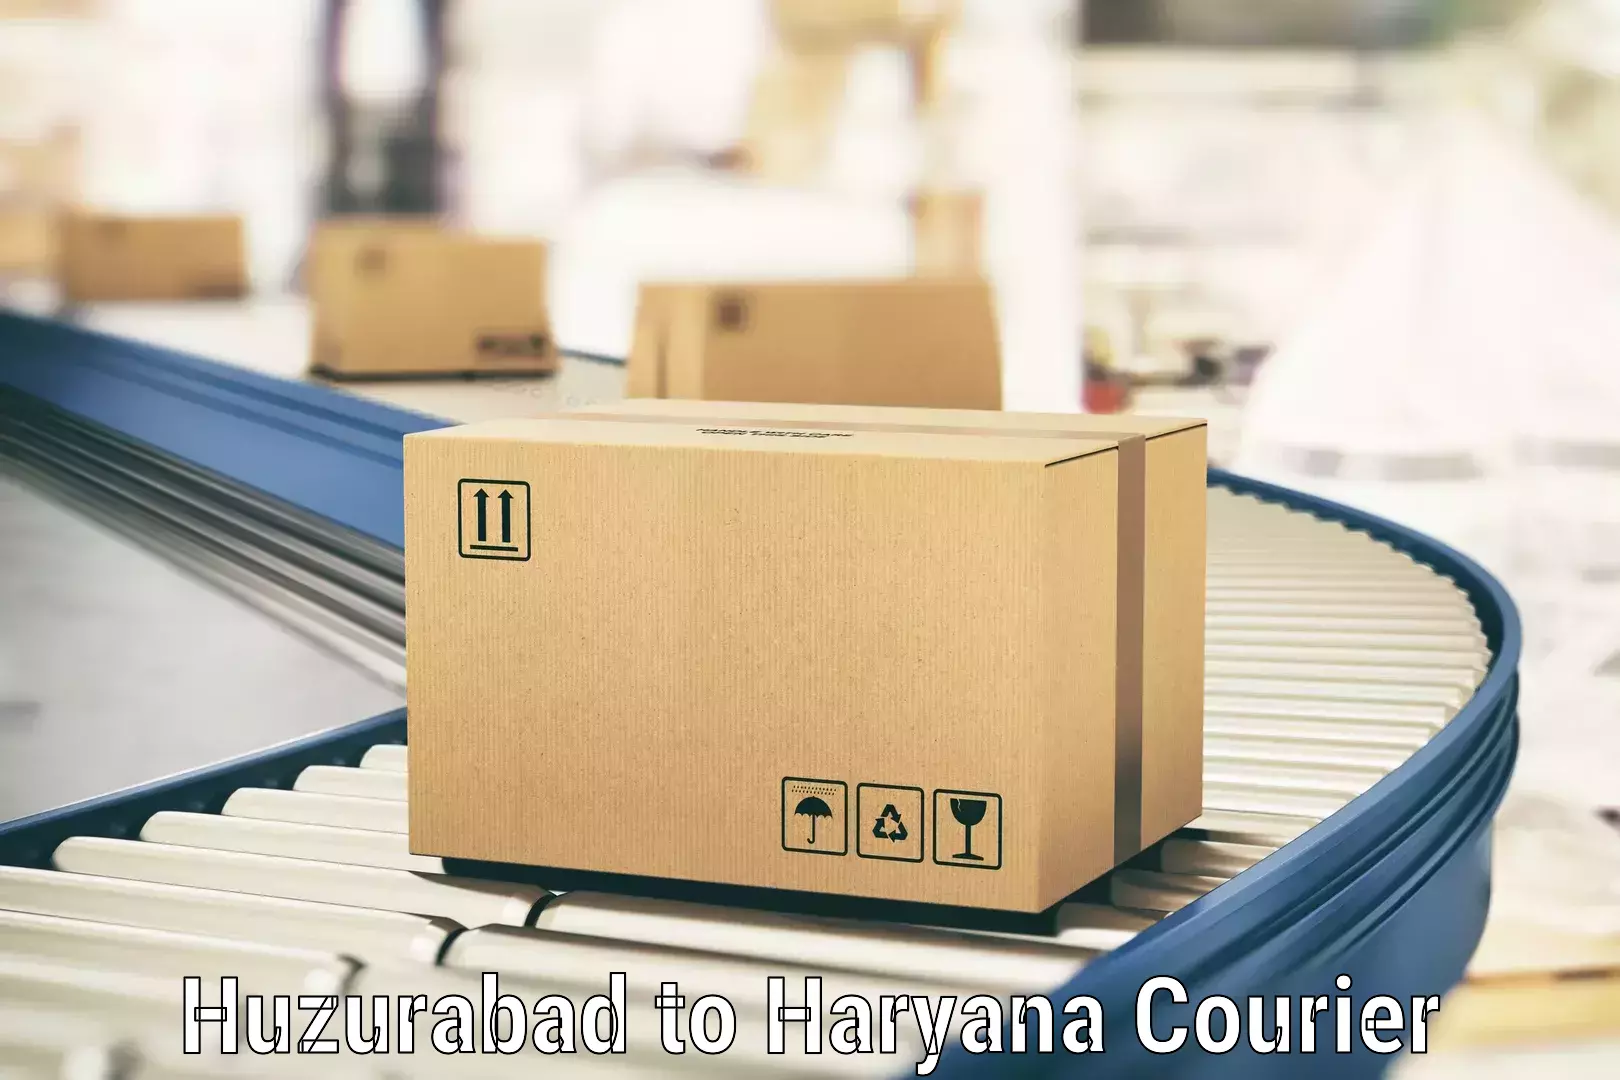 International parcel service Huzurabad to NCR Haryana